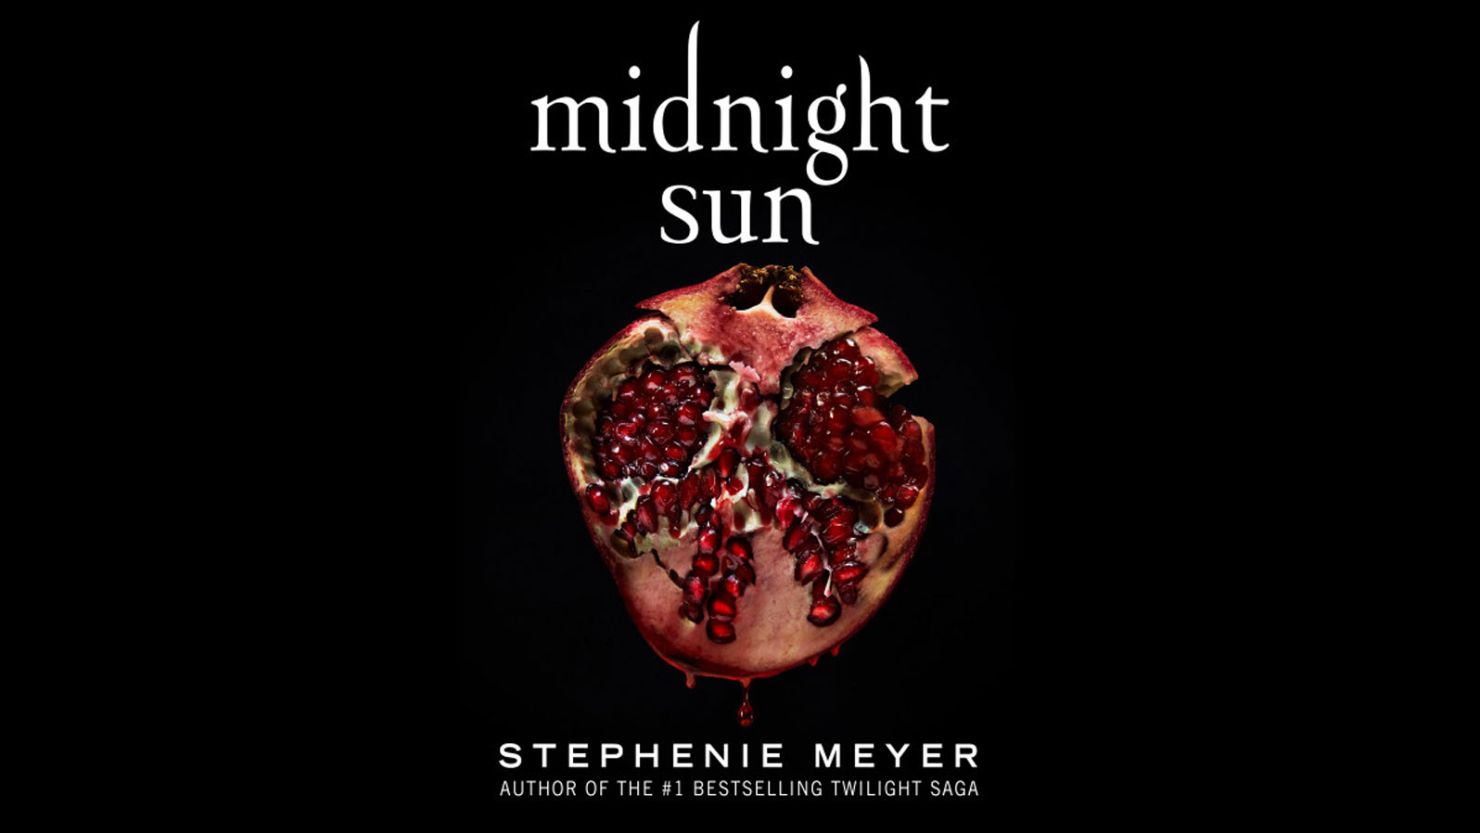 Midnight Sun (TV Series 2016) - IMDb